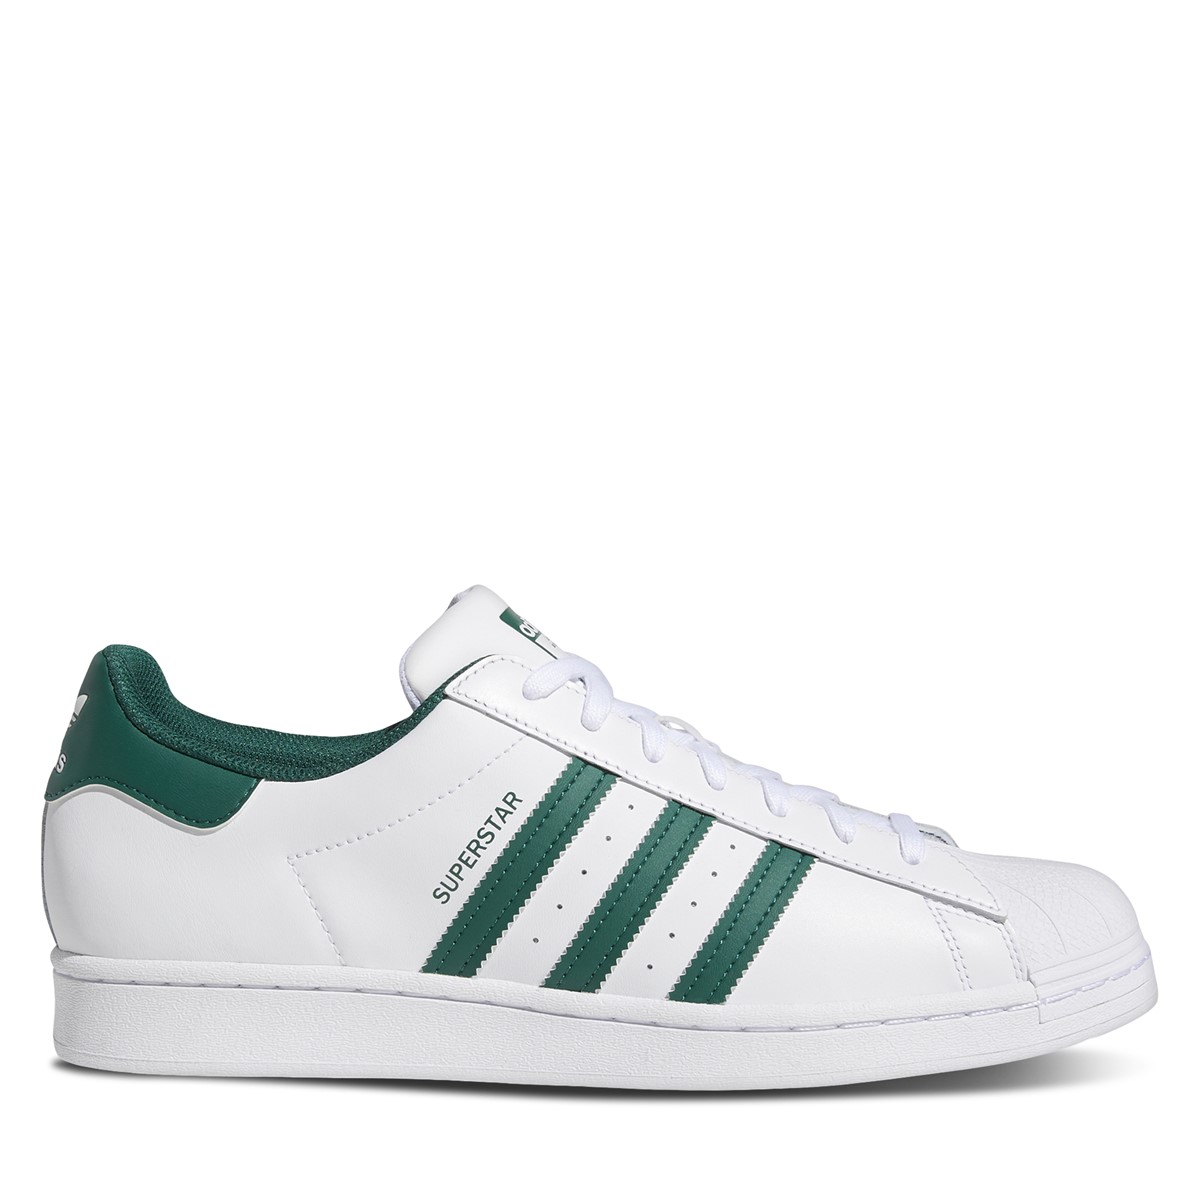 Men's Superstar Sneakers in White/Green